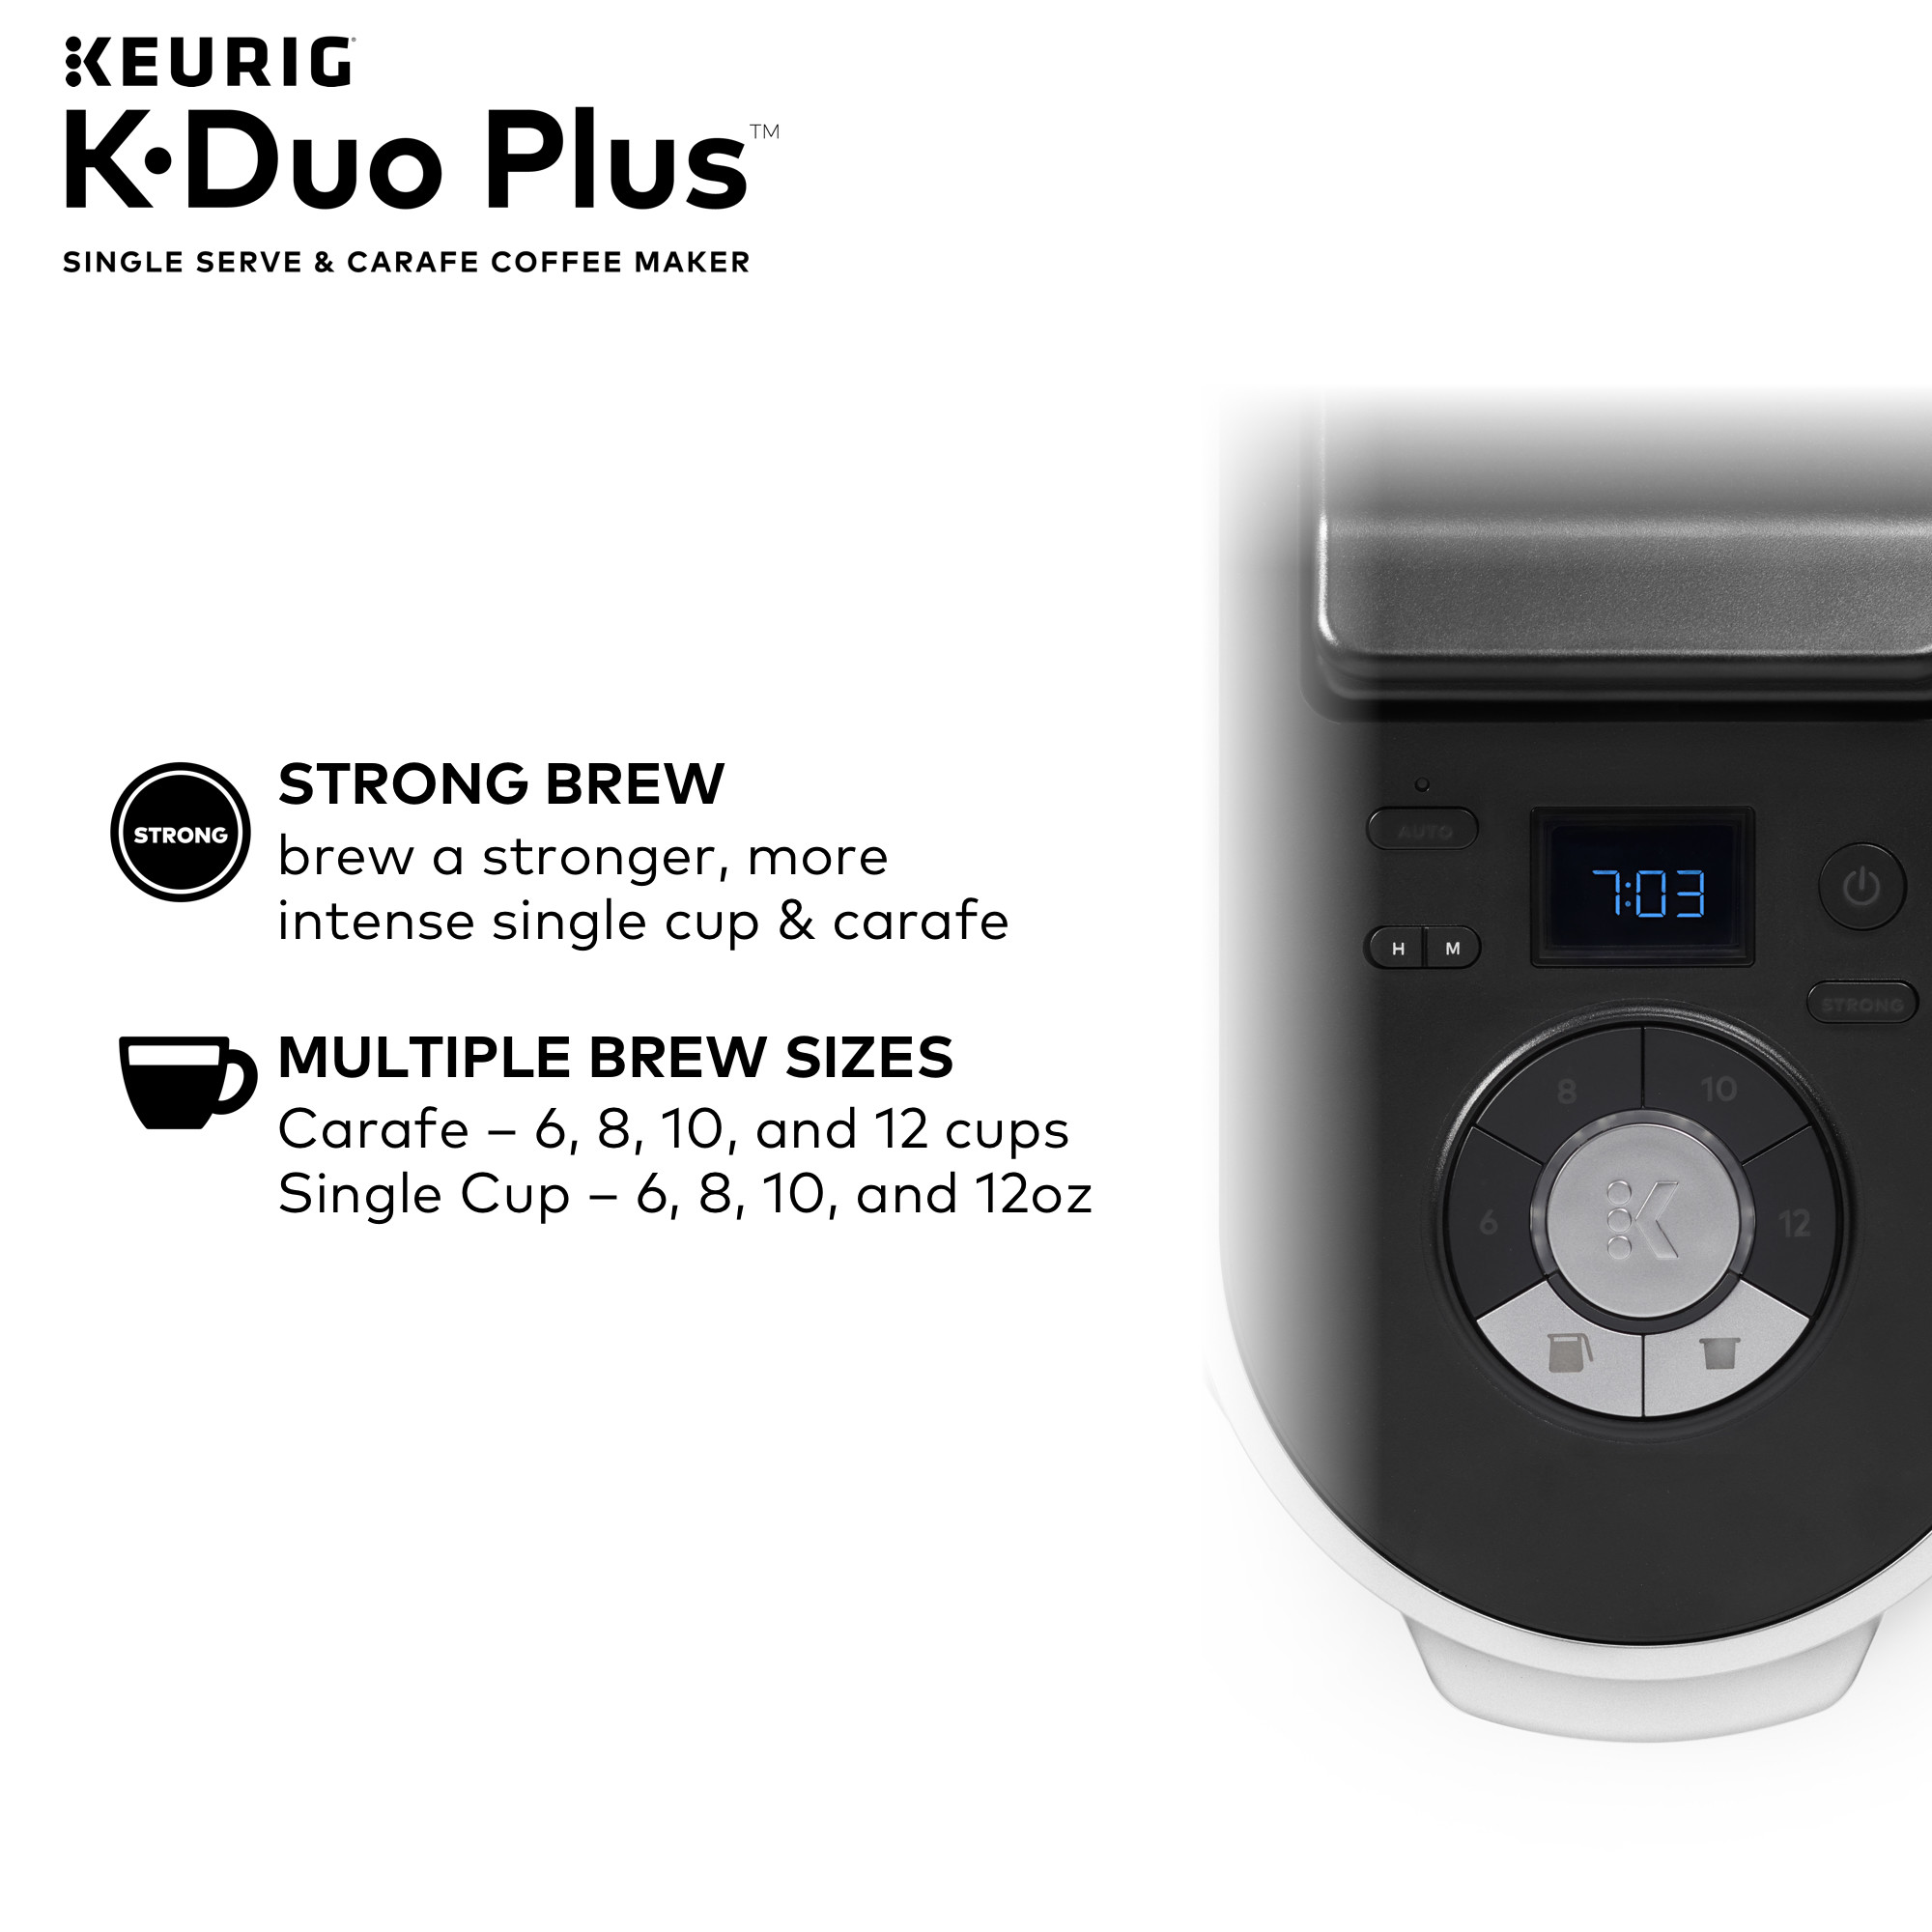 Keurig K-Duo Plus Single Serve & Carafe Coffee Maker - image 20 of 25